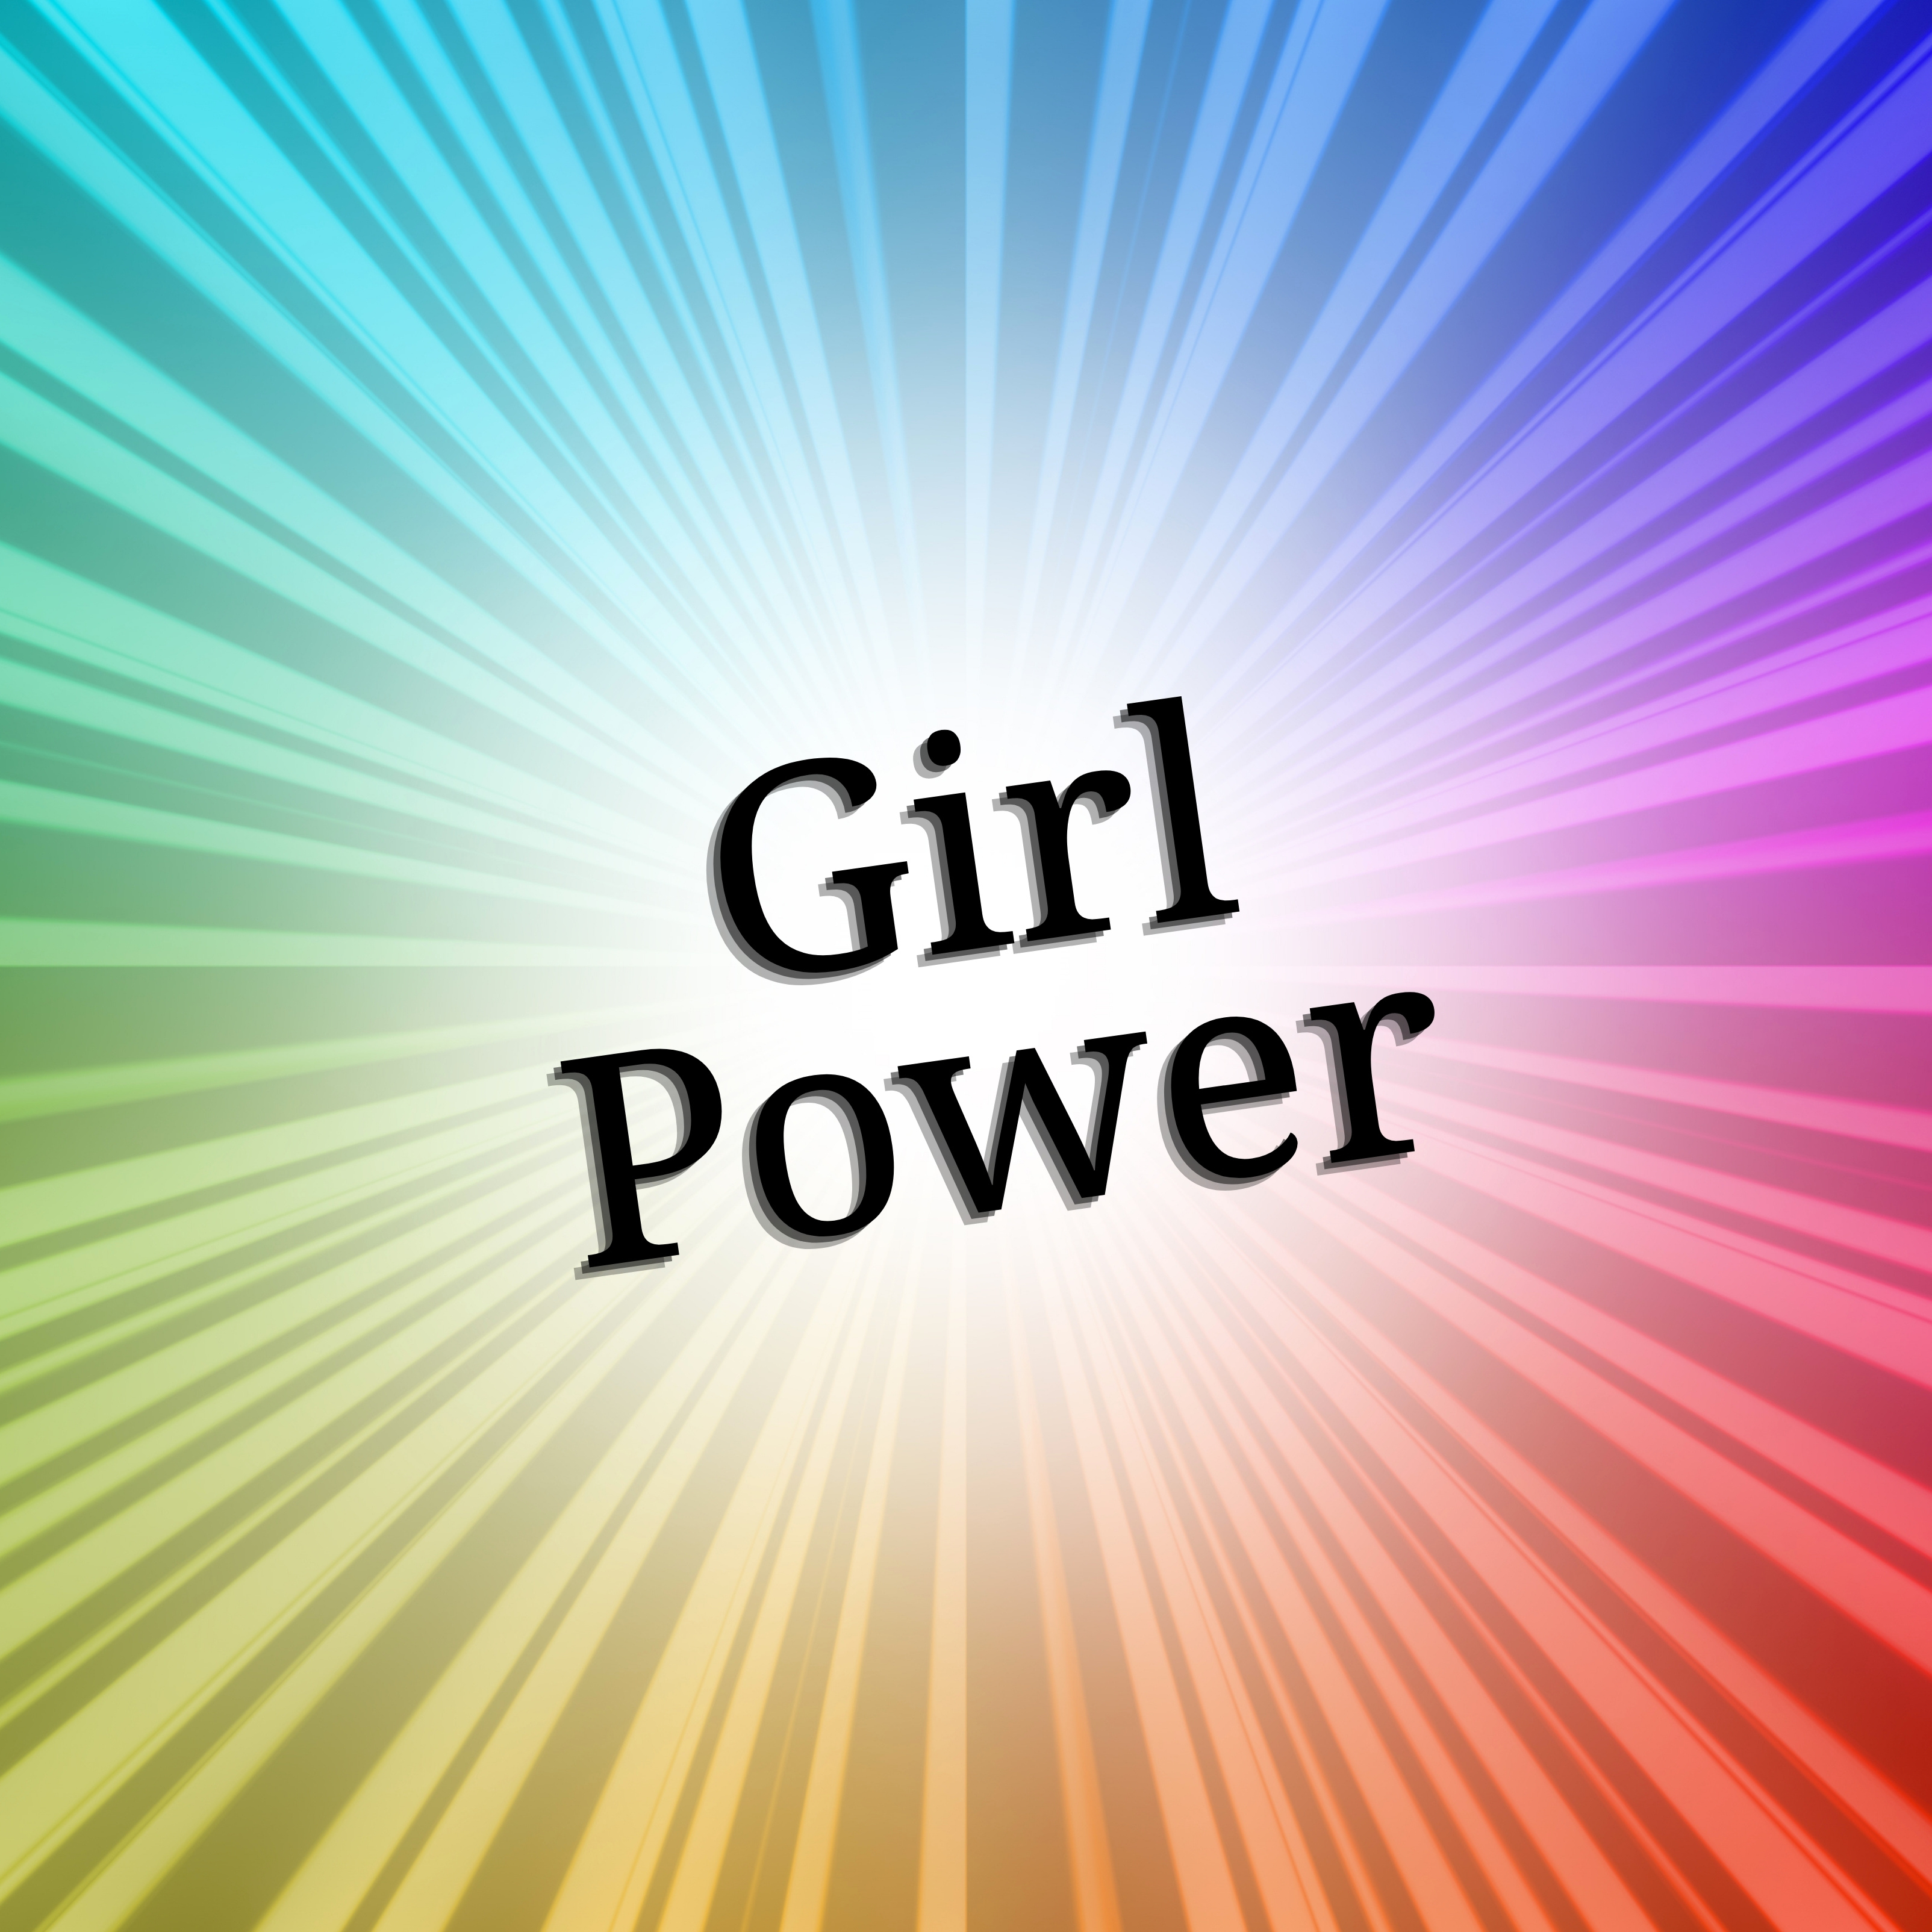 iPad Wallpapers Girl Power iPad Wallpaper 3208x3208 px